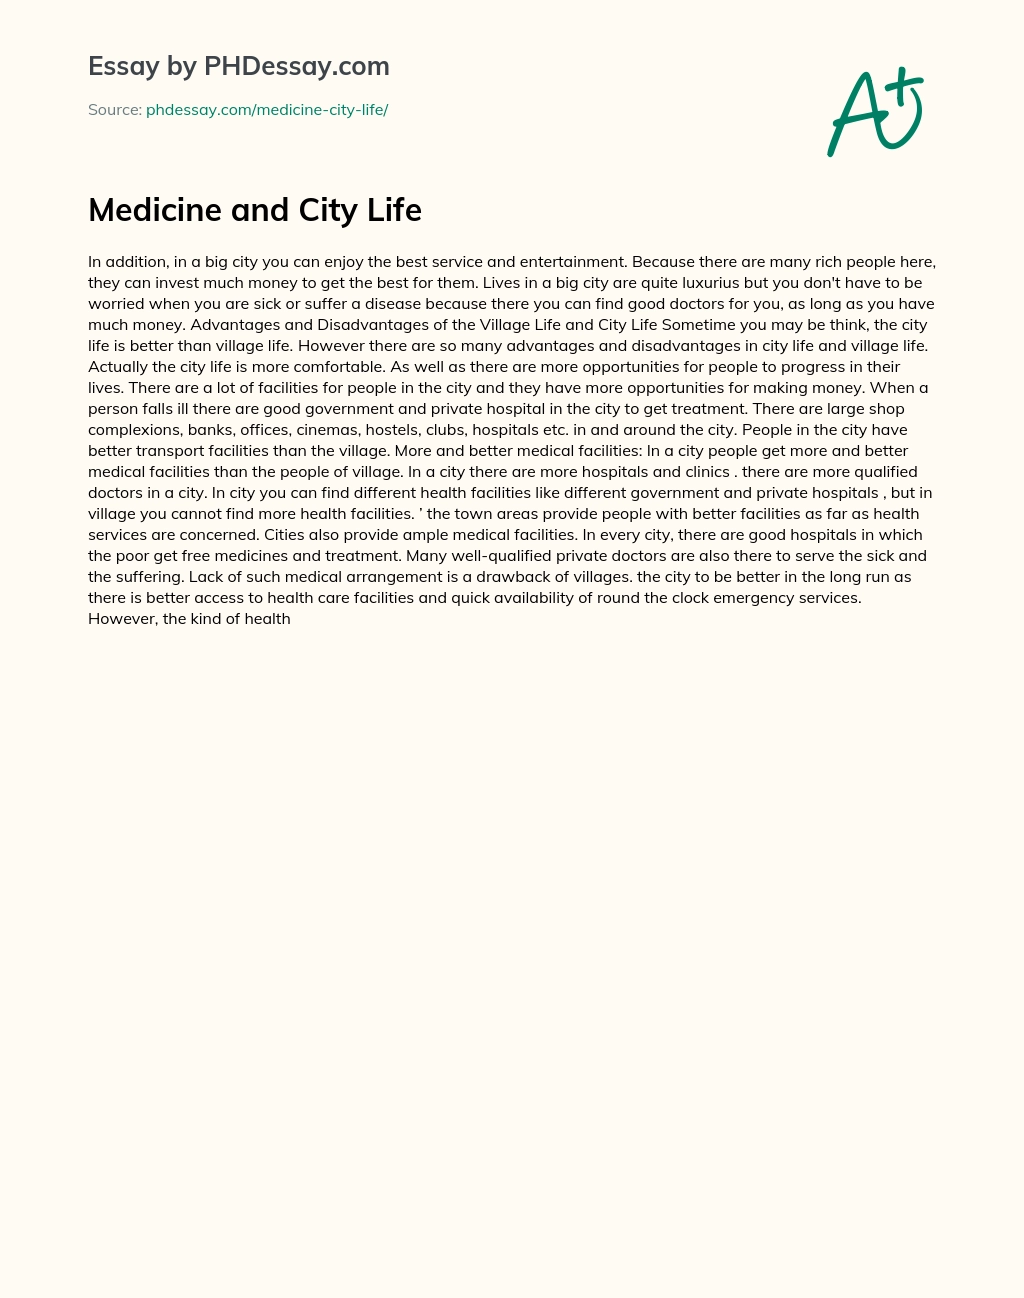 Medicine and City Life essay